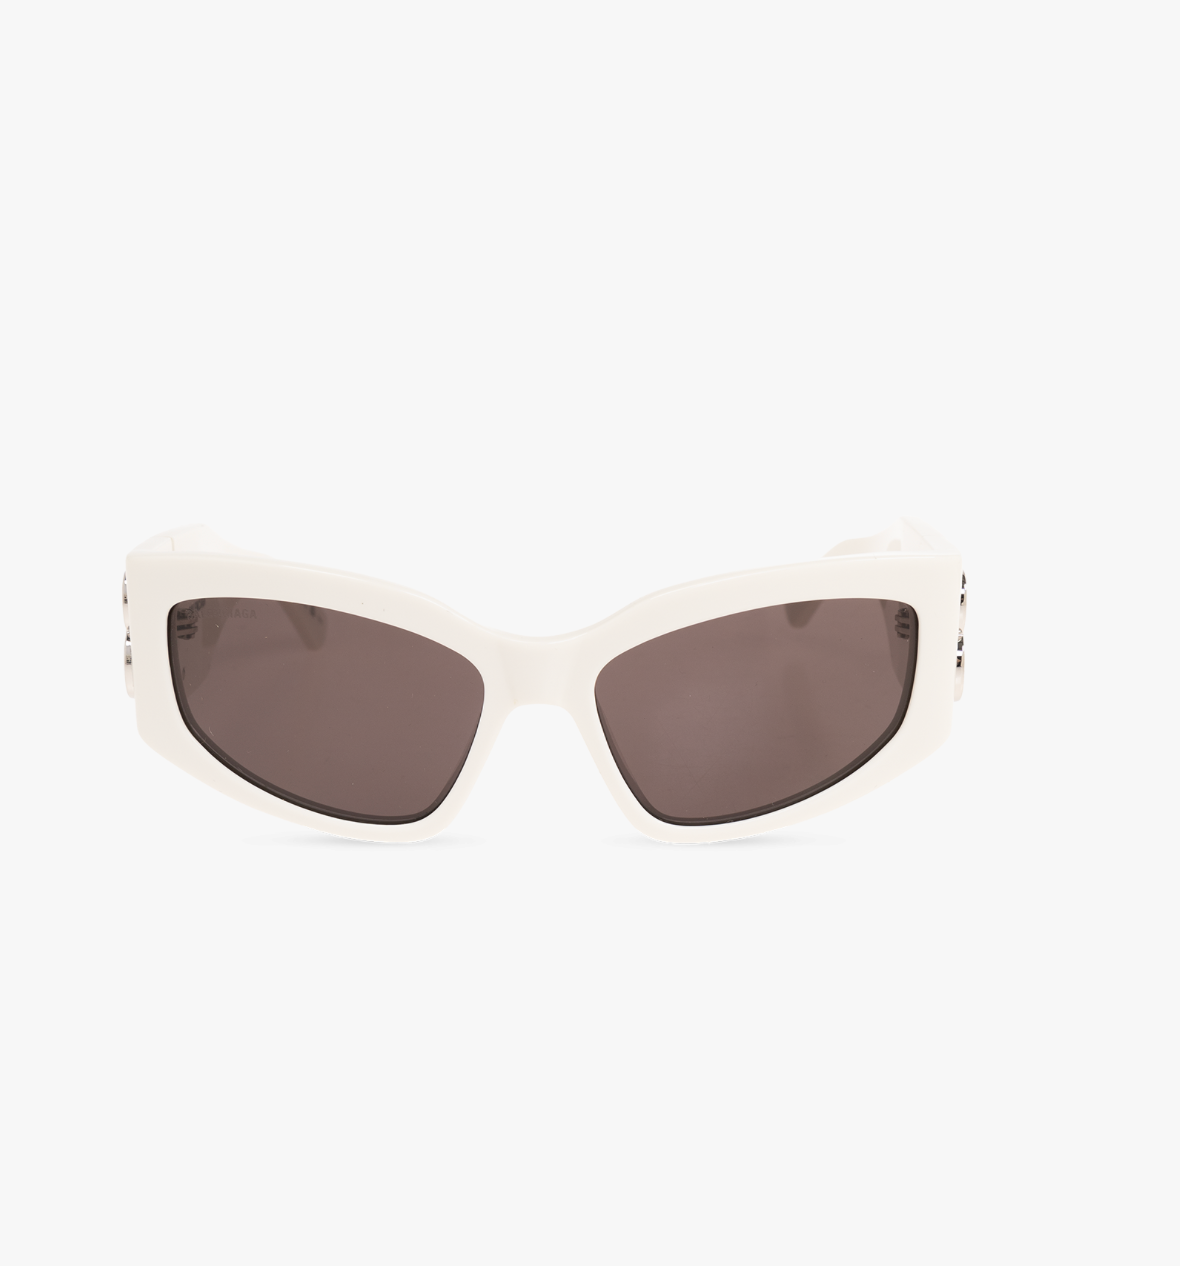 Balenciaga BB0321S-005 57mm New Sunglasses